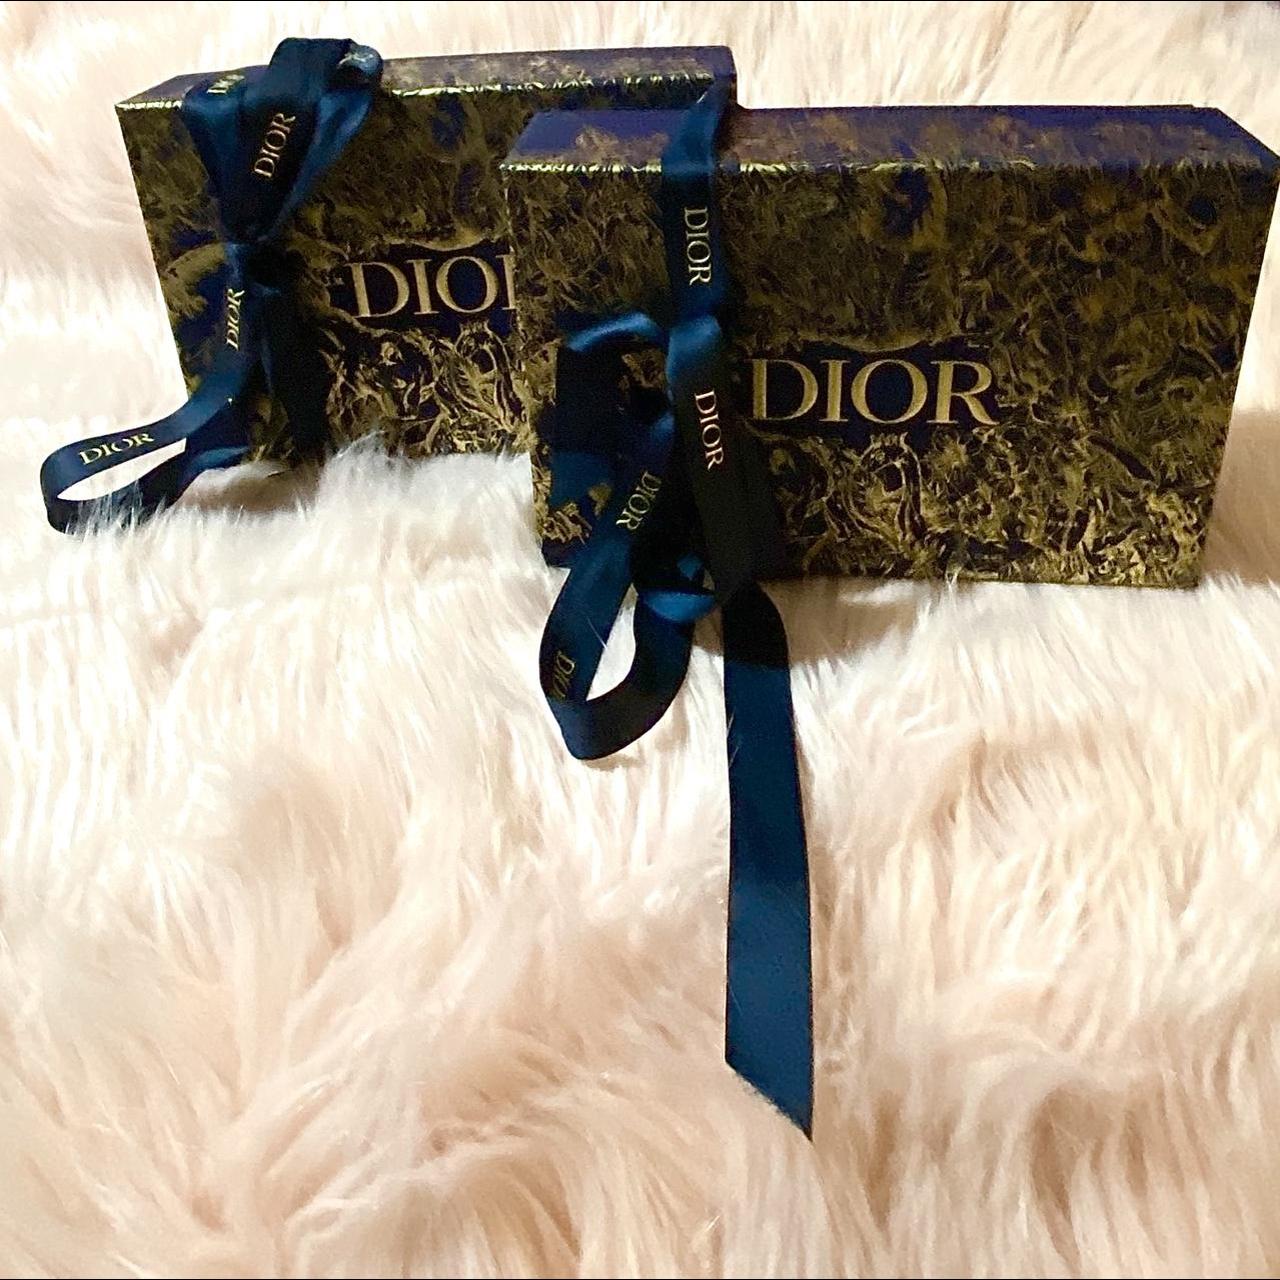 Dior gift receipt . 1pcs only #dior #giftreceipt - Depop